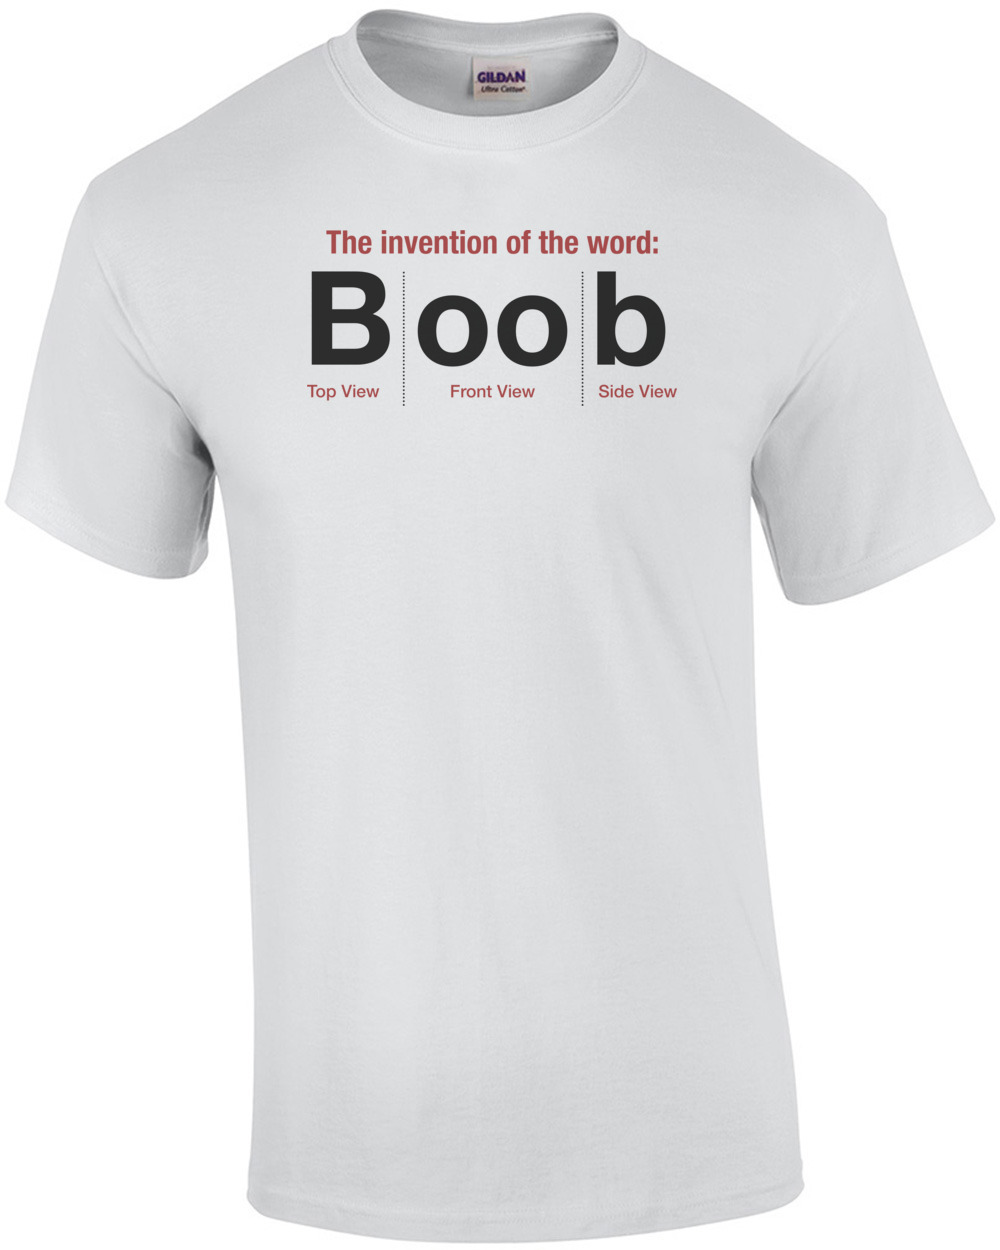 The Invention Of The Word Boob Mug, Coffee Mug, Travel Mug - Q-Finder  Trending Design T Shirt